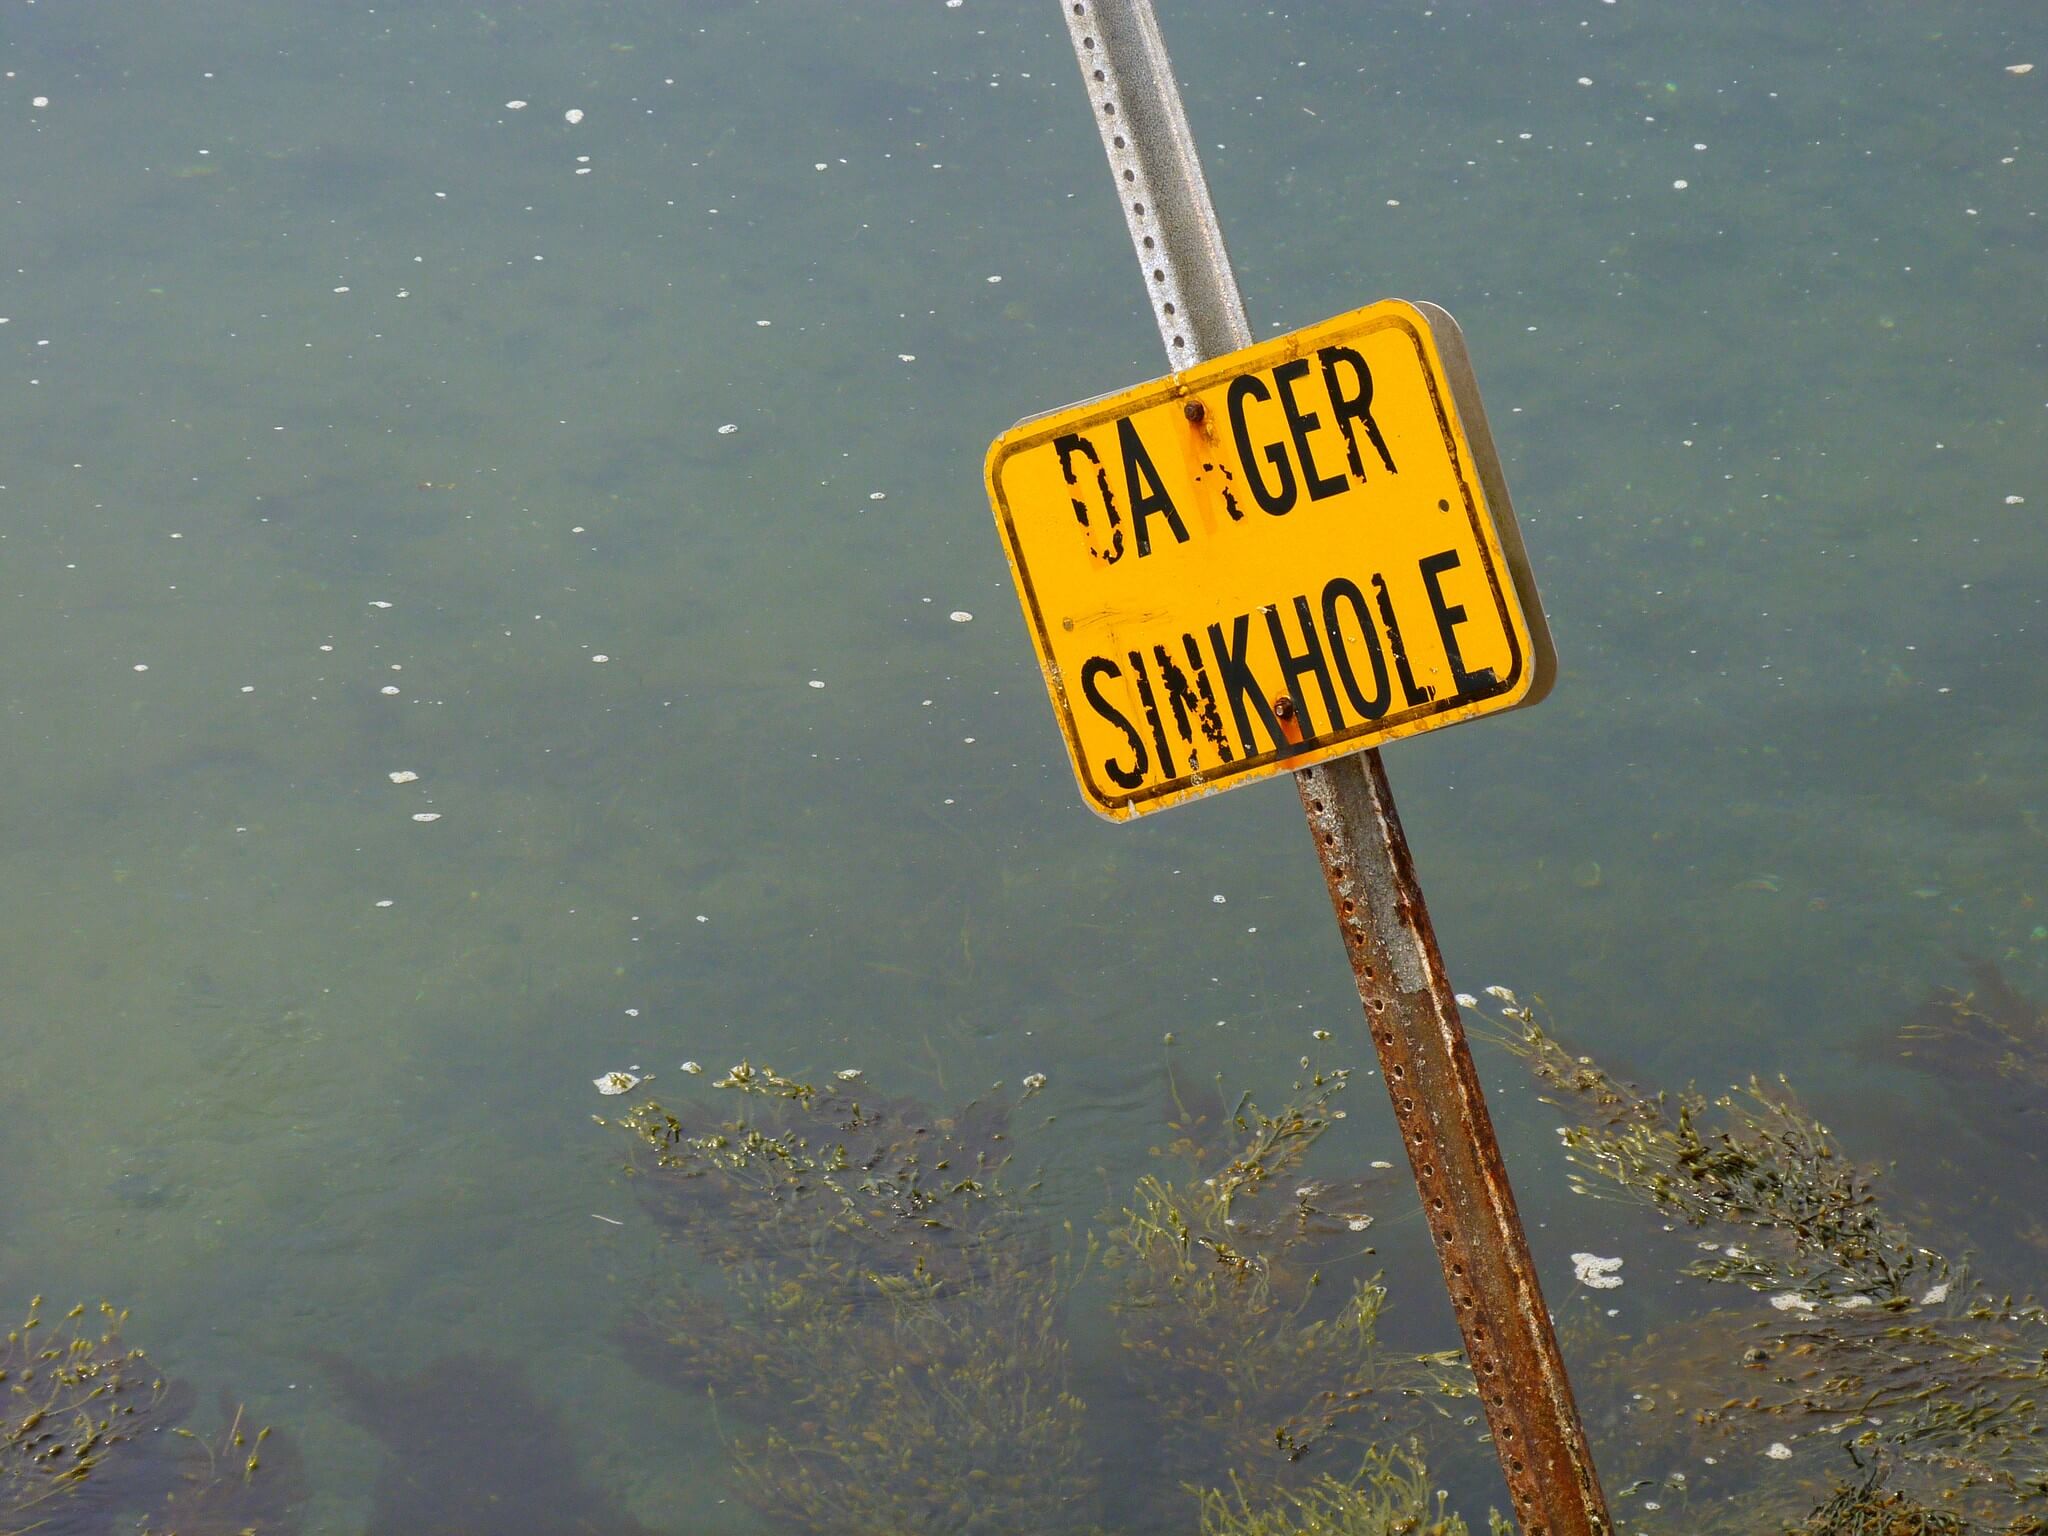 sign reading "Danger Sinkhole"